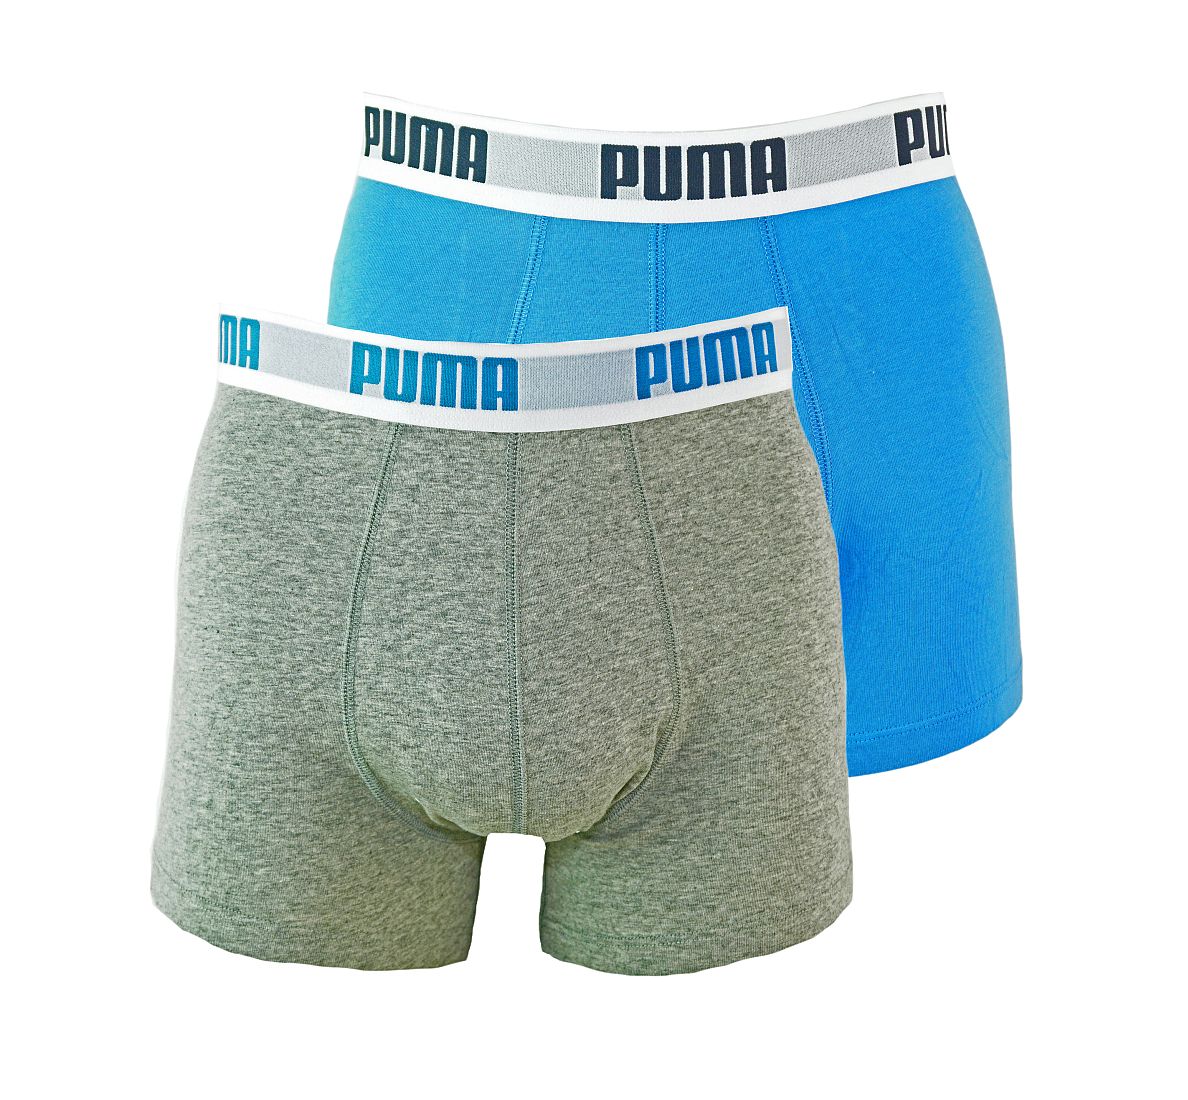 PUMA Shorts Unterhosen 2er Pack Boxer 521015001 417 020 blue grey SF17-PMS1